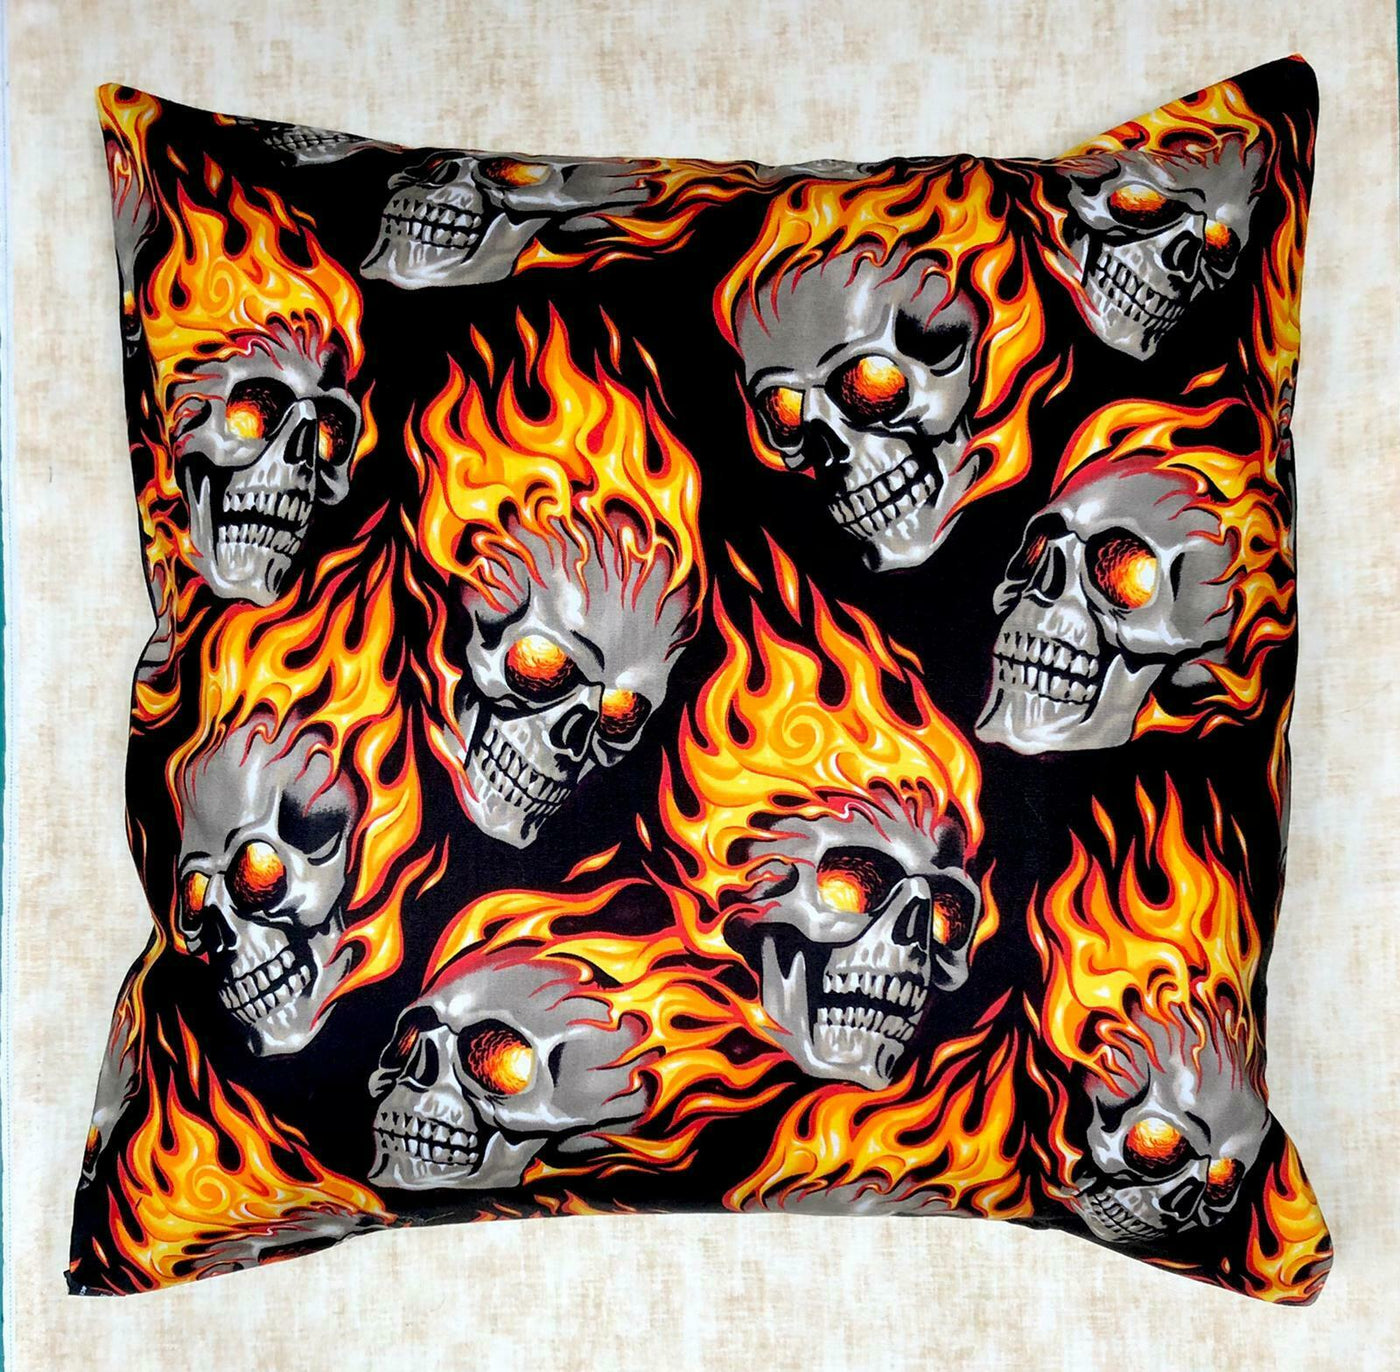 Skulls on Fire Designer Cushion Cover Case fits 18" x 18" Alexander Henry Cotton